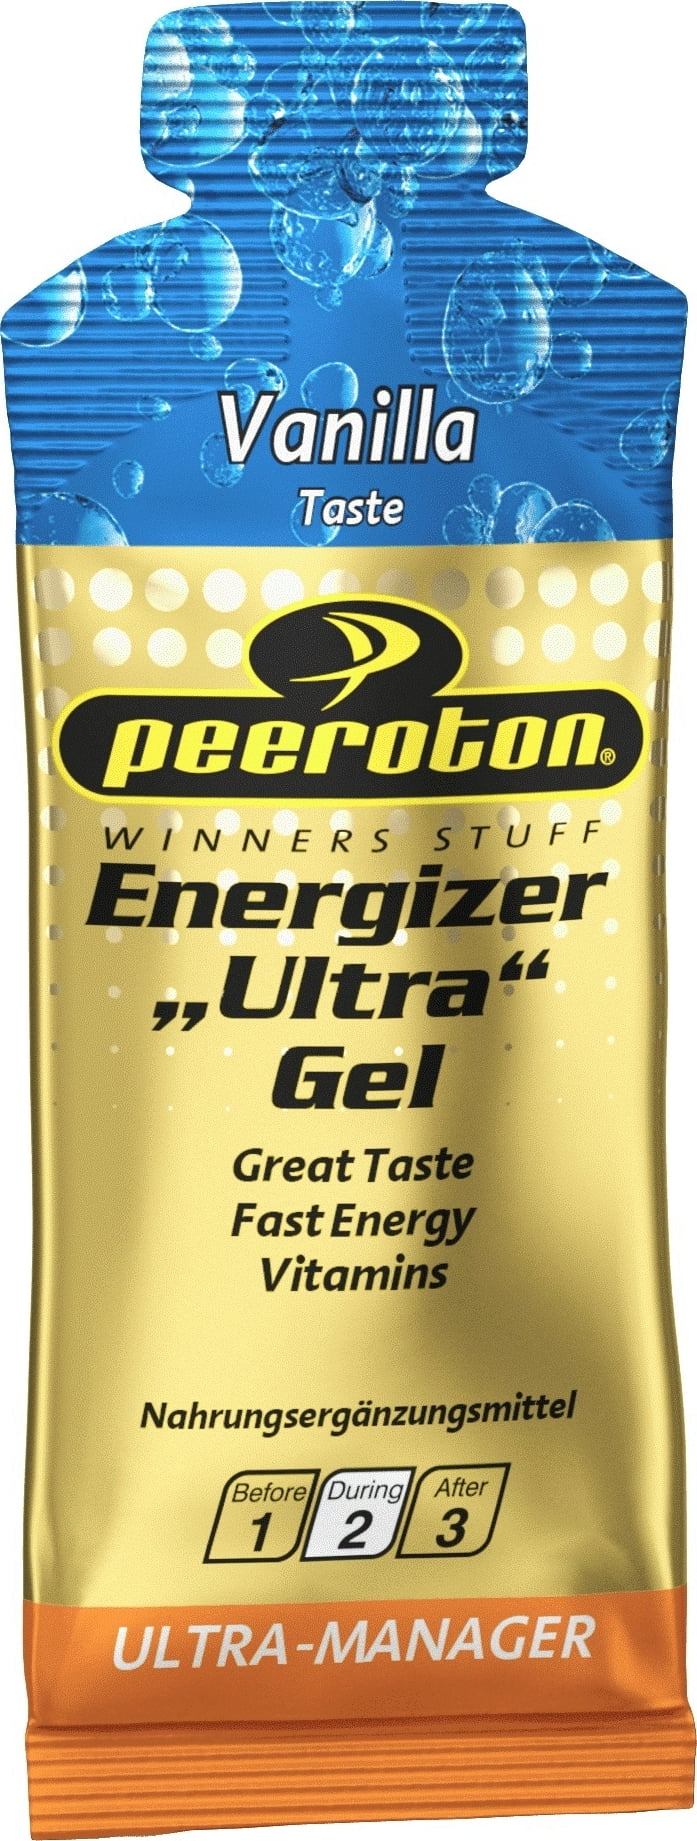 Peeroton Energizer ULTRA Gel - Vanille